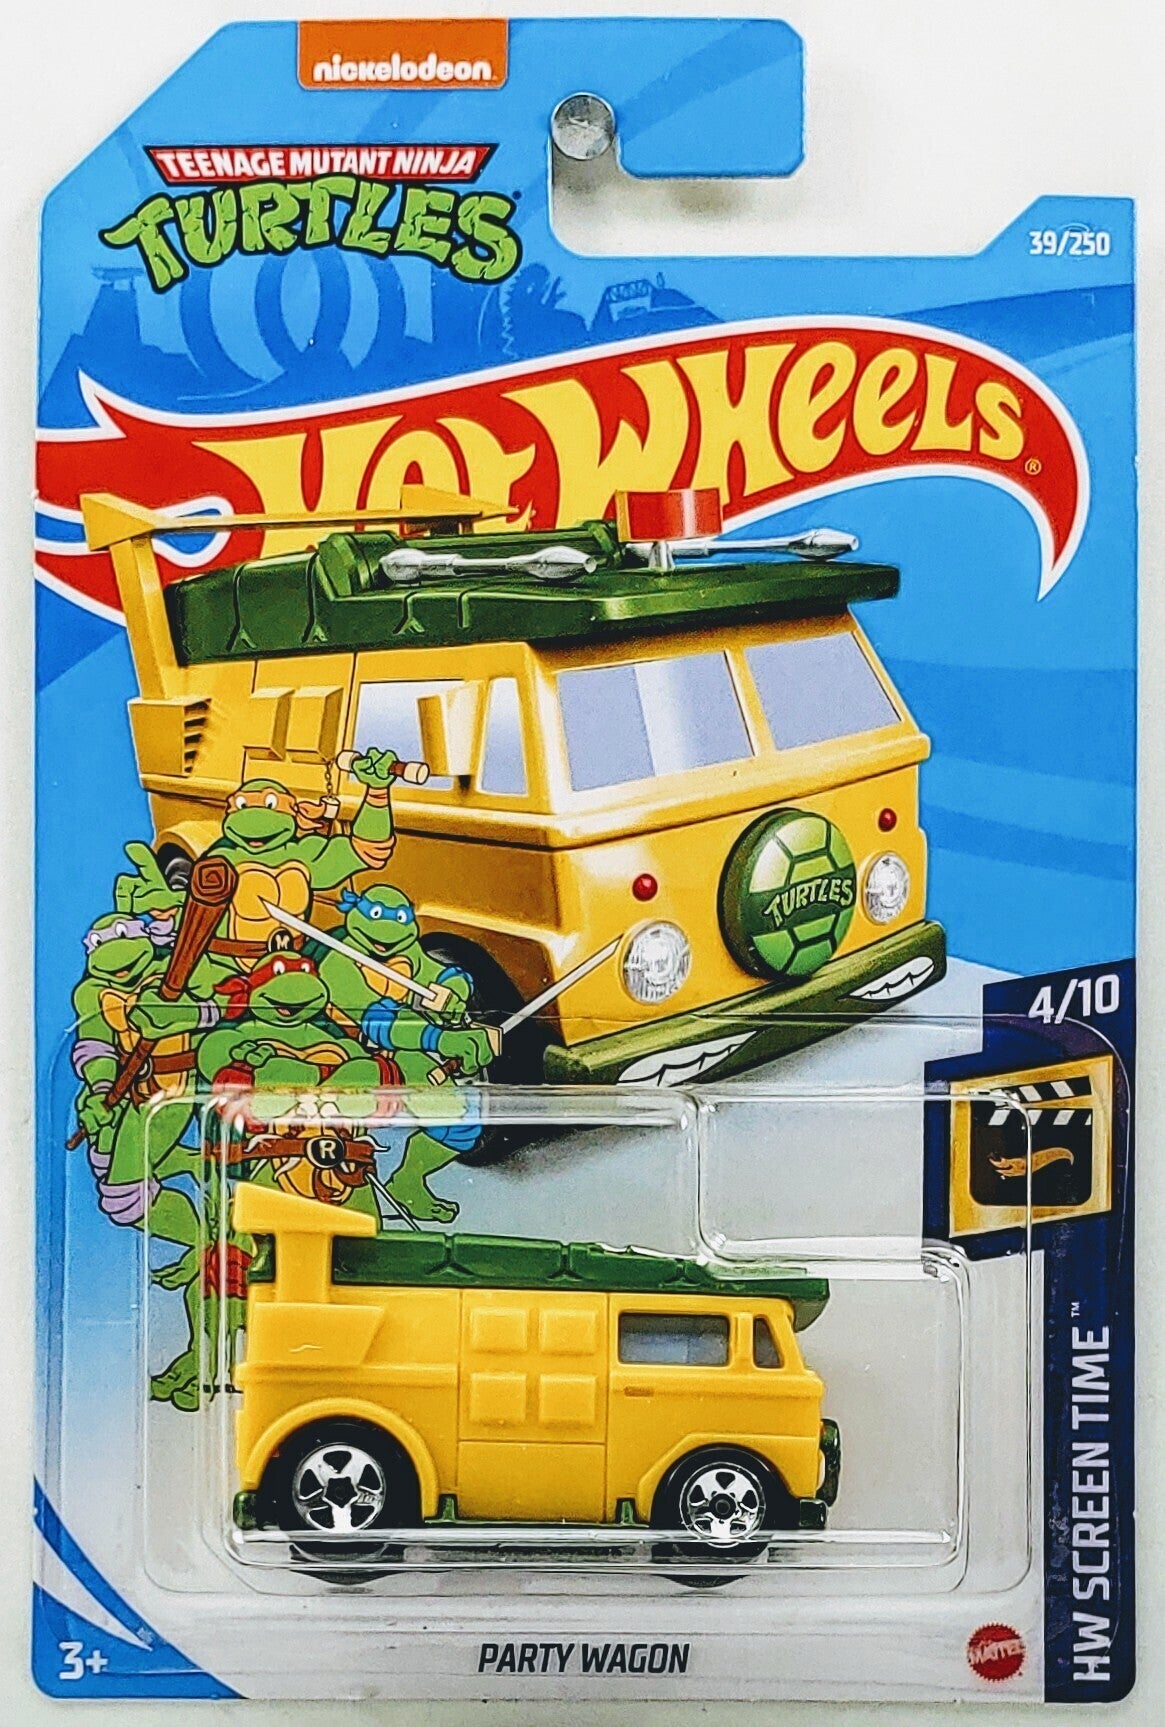 Hot Wheels 2021 - Collector # 039/250 - HW Screen Time 4/10 - Party Wagon - Yellow & Green / Teenage Mutant Ninja Turtles - IC